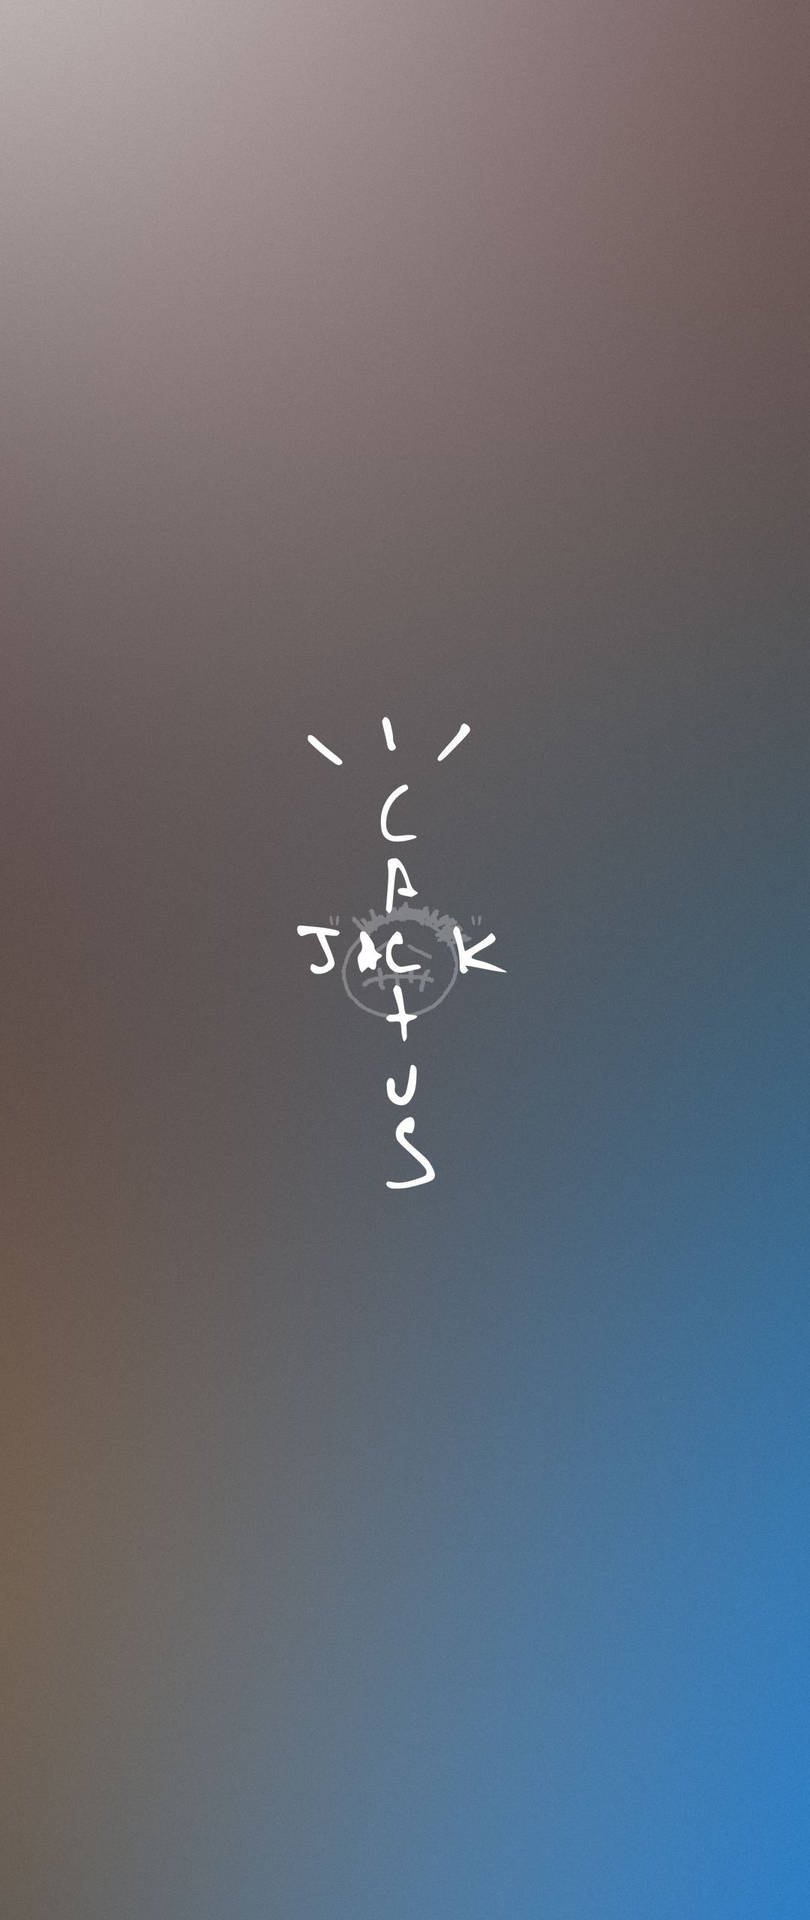 Cactus Jack Travis Scott Text Logo Blue And Gray